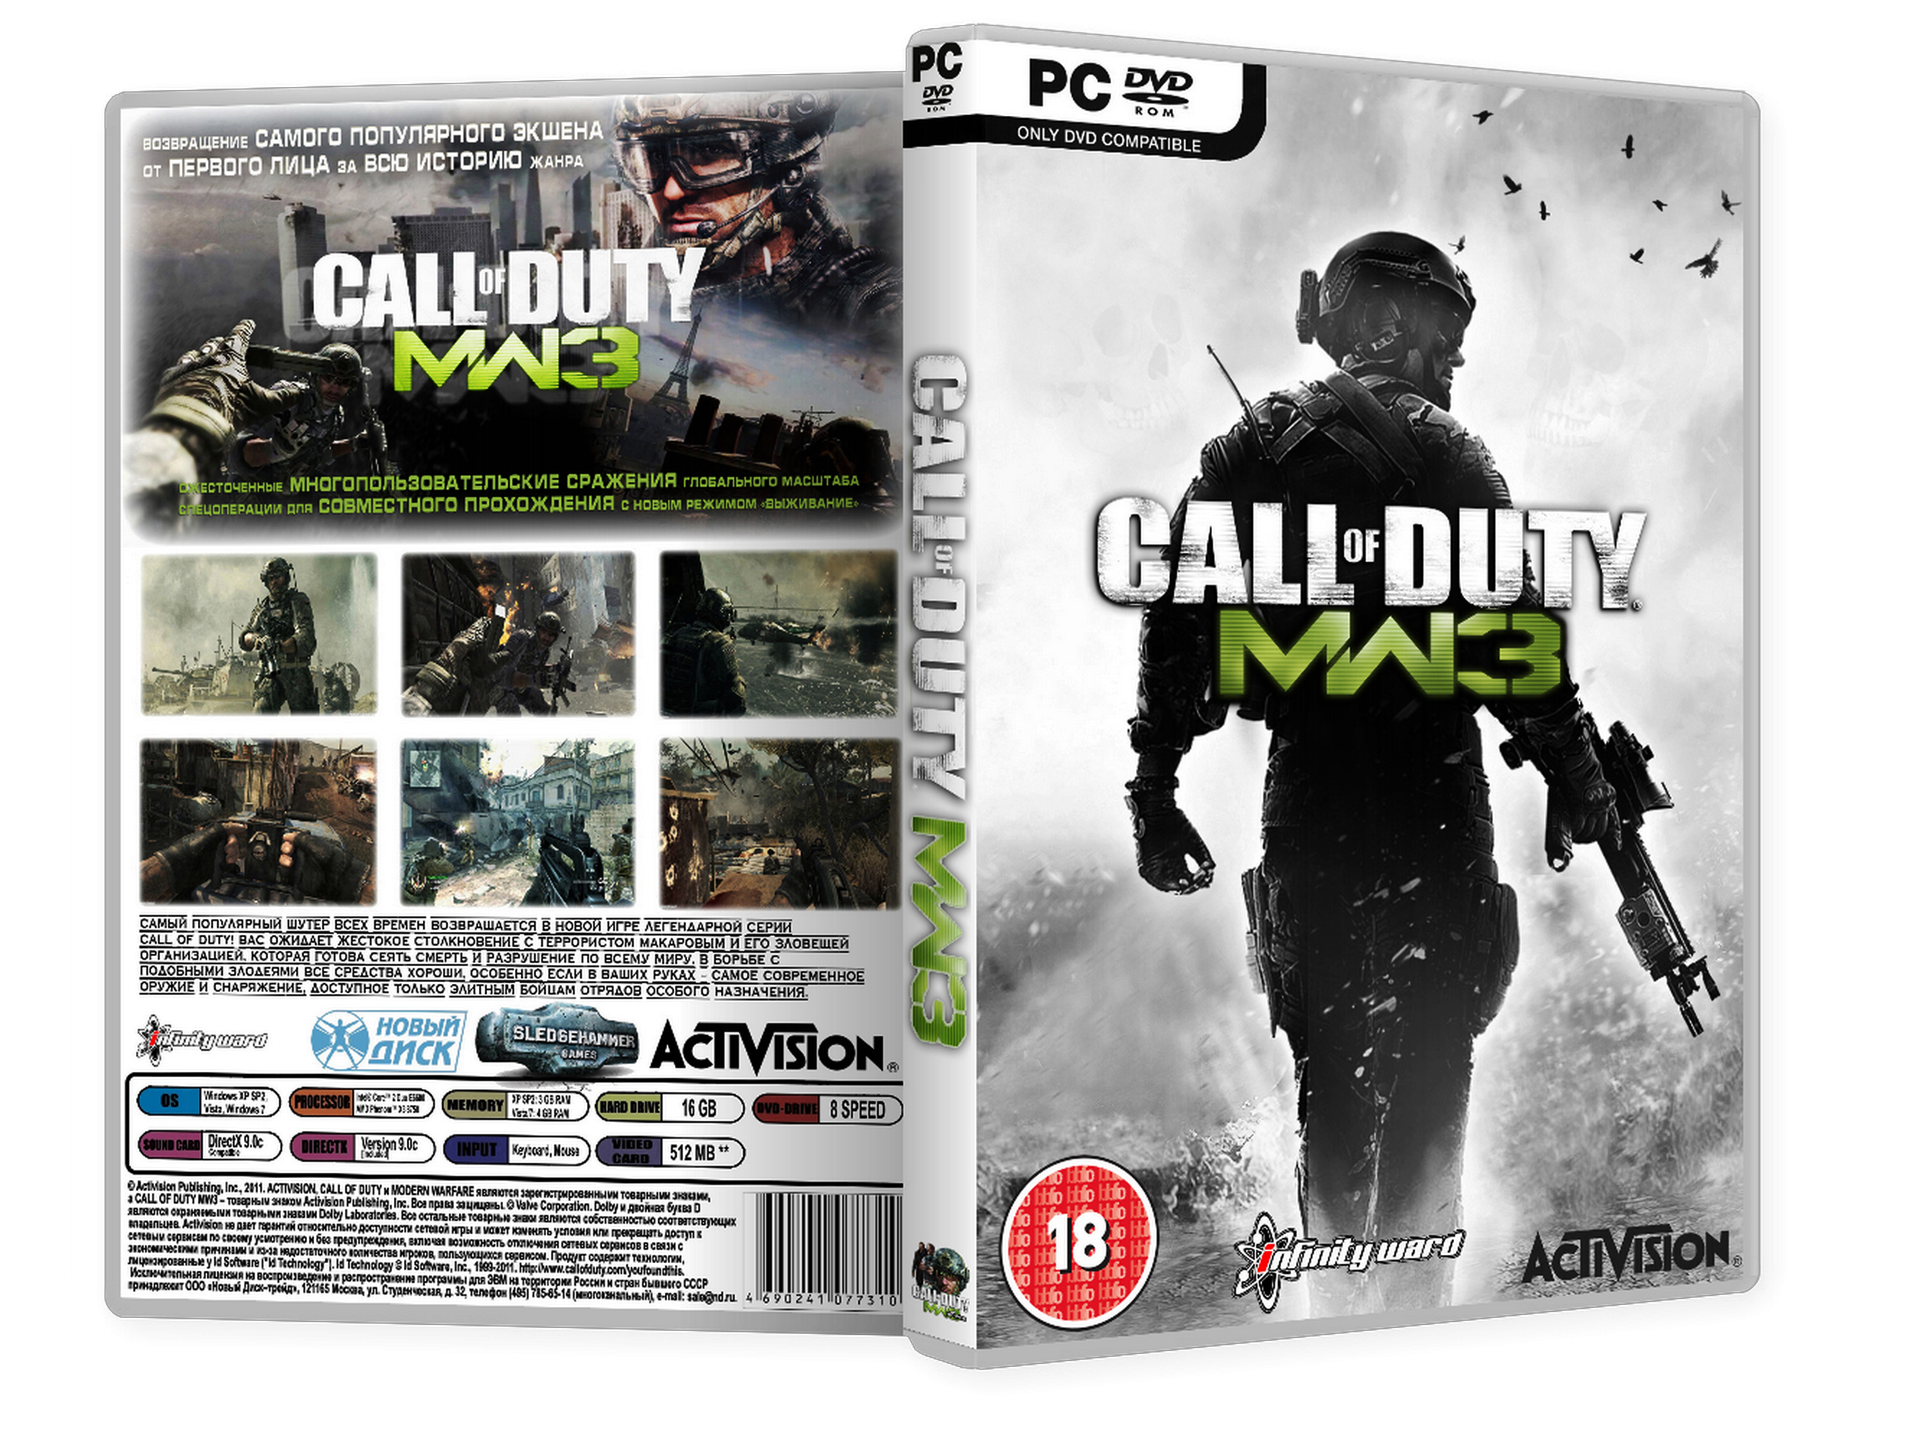 Call Of Duty Modern Warfare 3 Cover